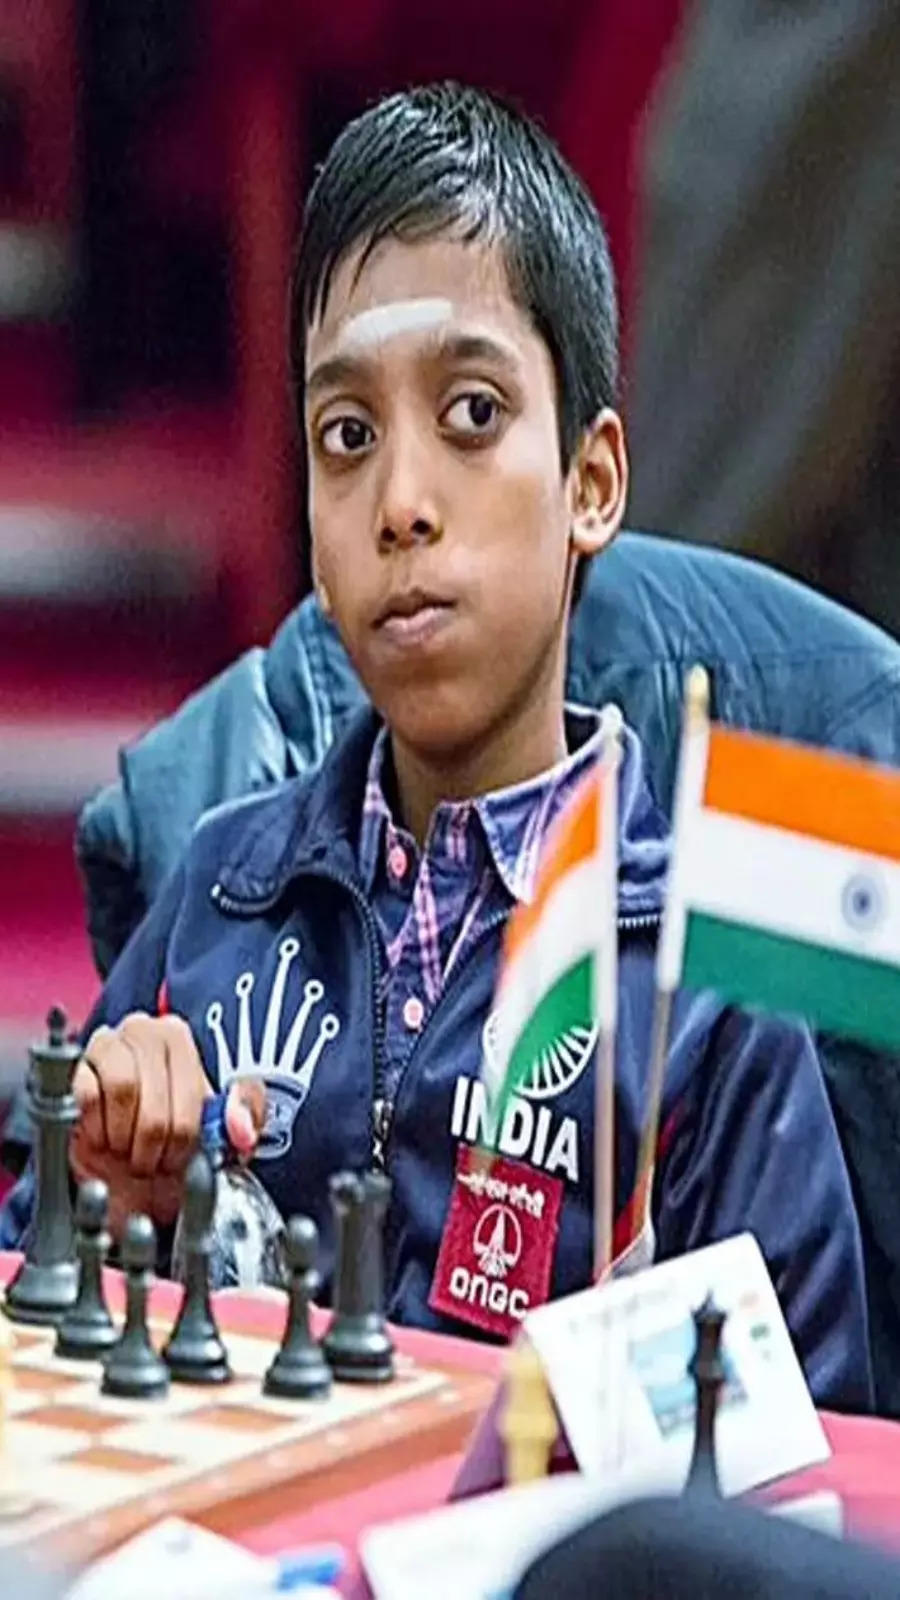 Indian teenager Praggnanandhaa beats world chess champion Carlsen, News